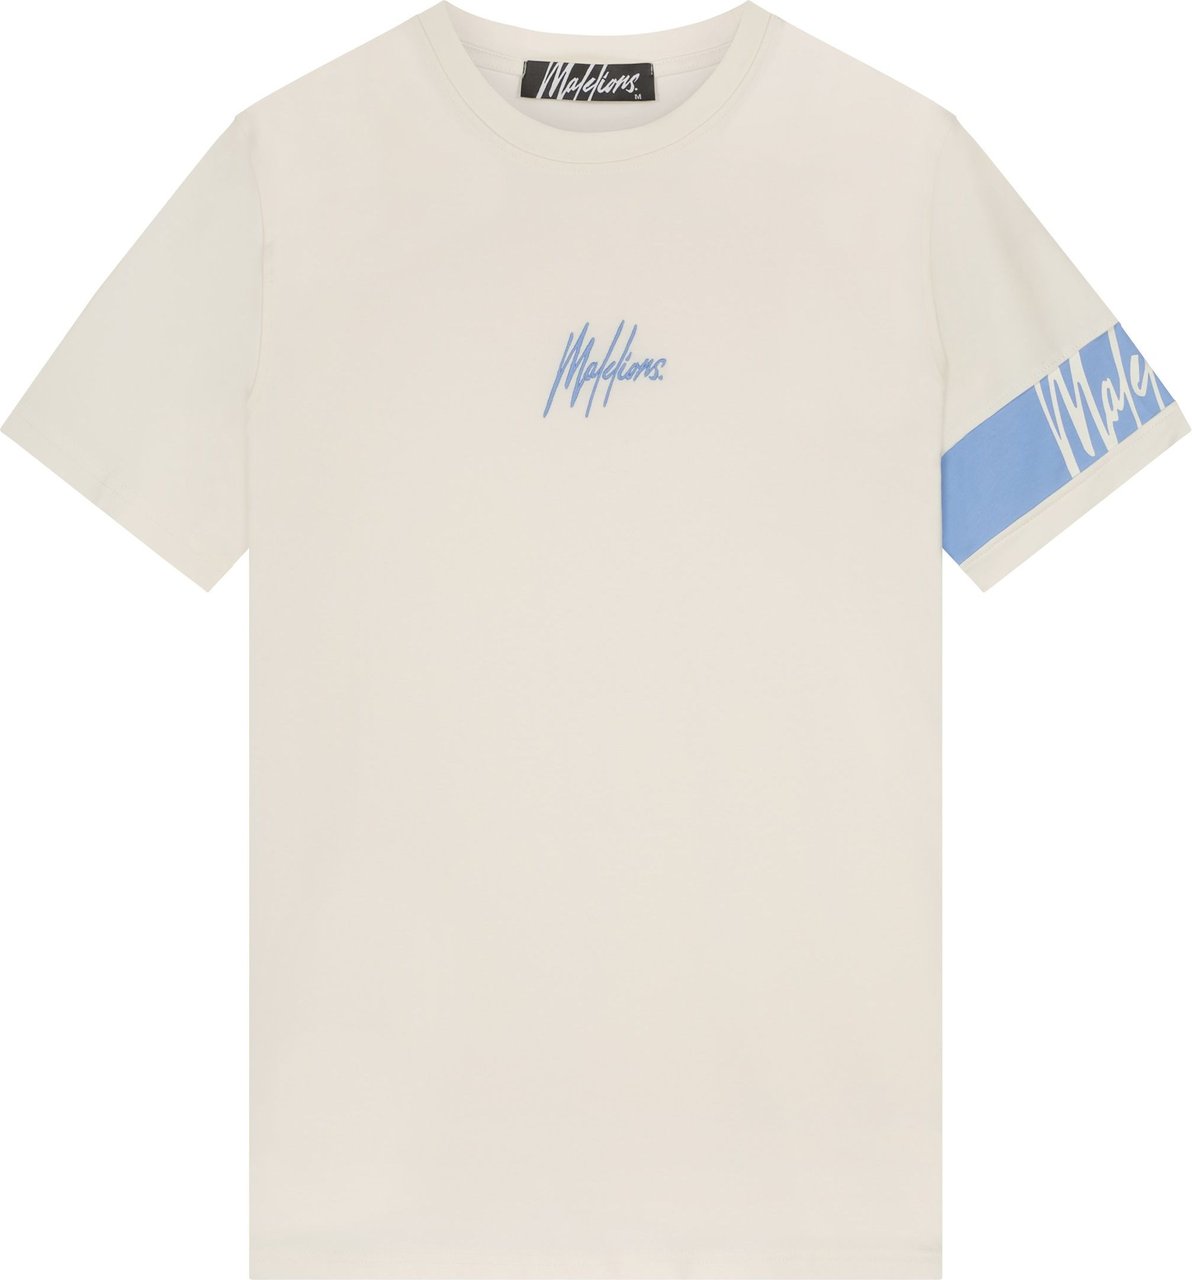 Malelions Captain T-Shirt - Off-White/Blue Wit